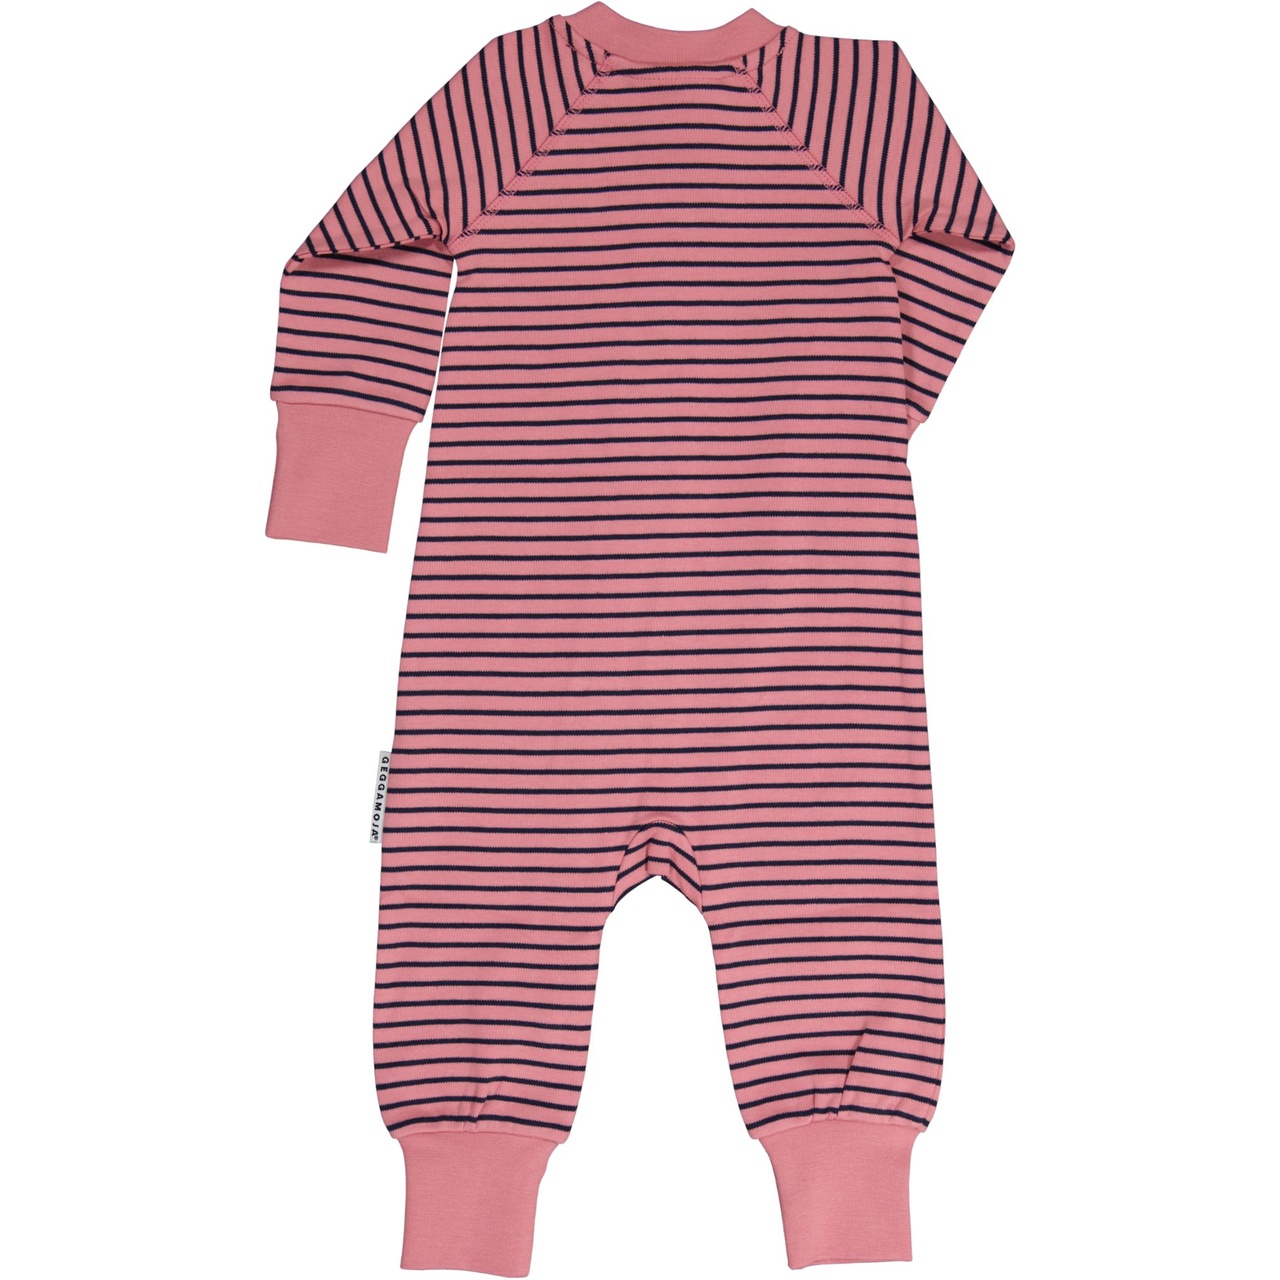 Pyjamas Two way zipper Pink/navy